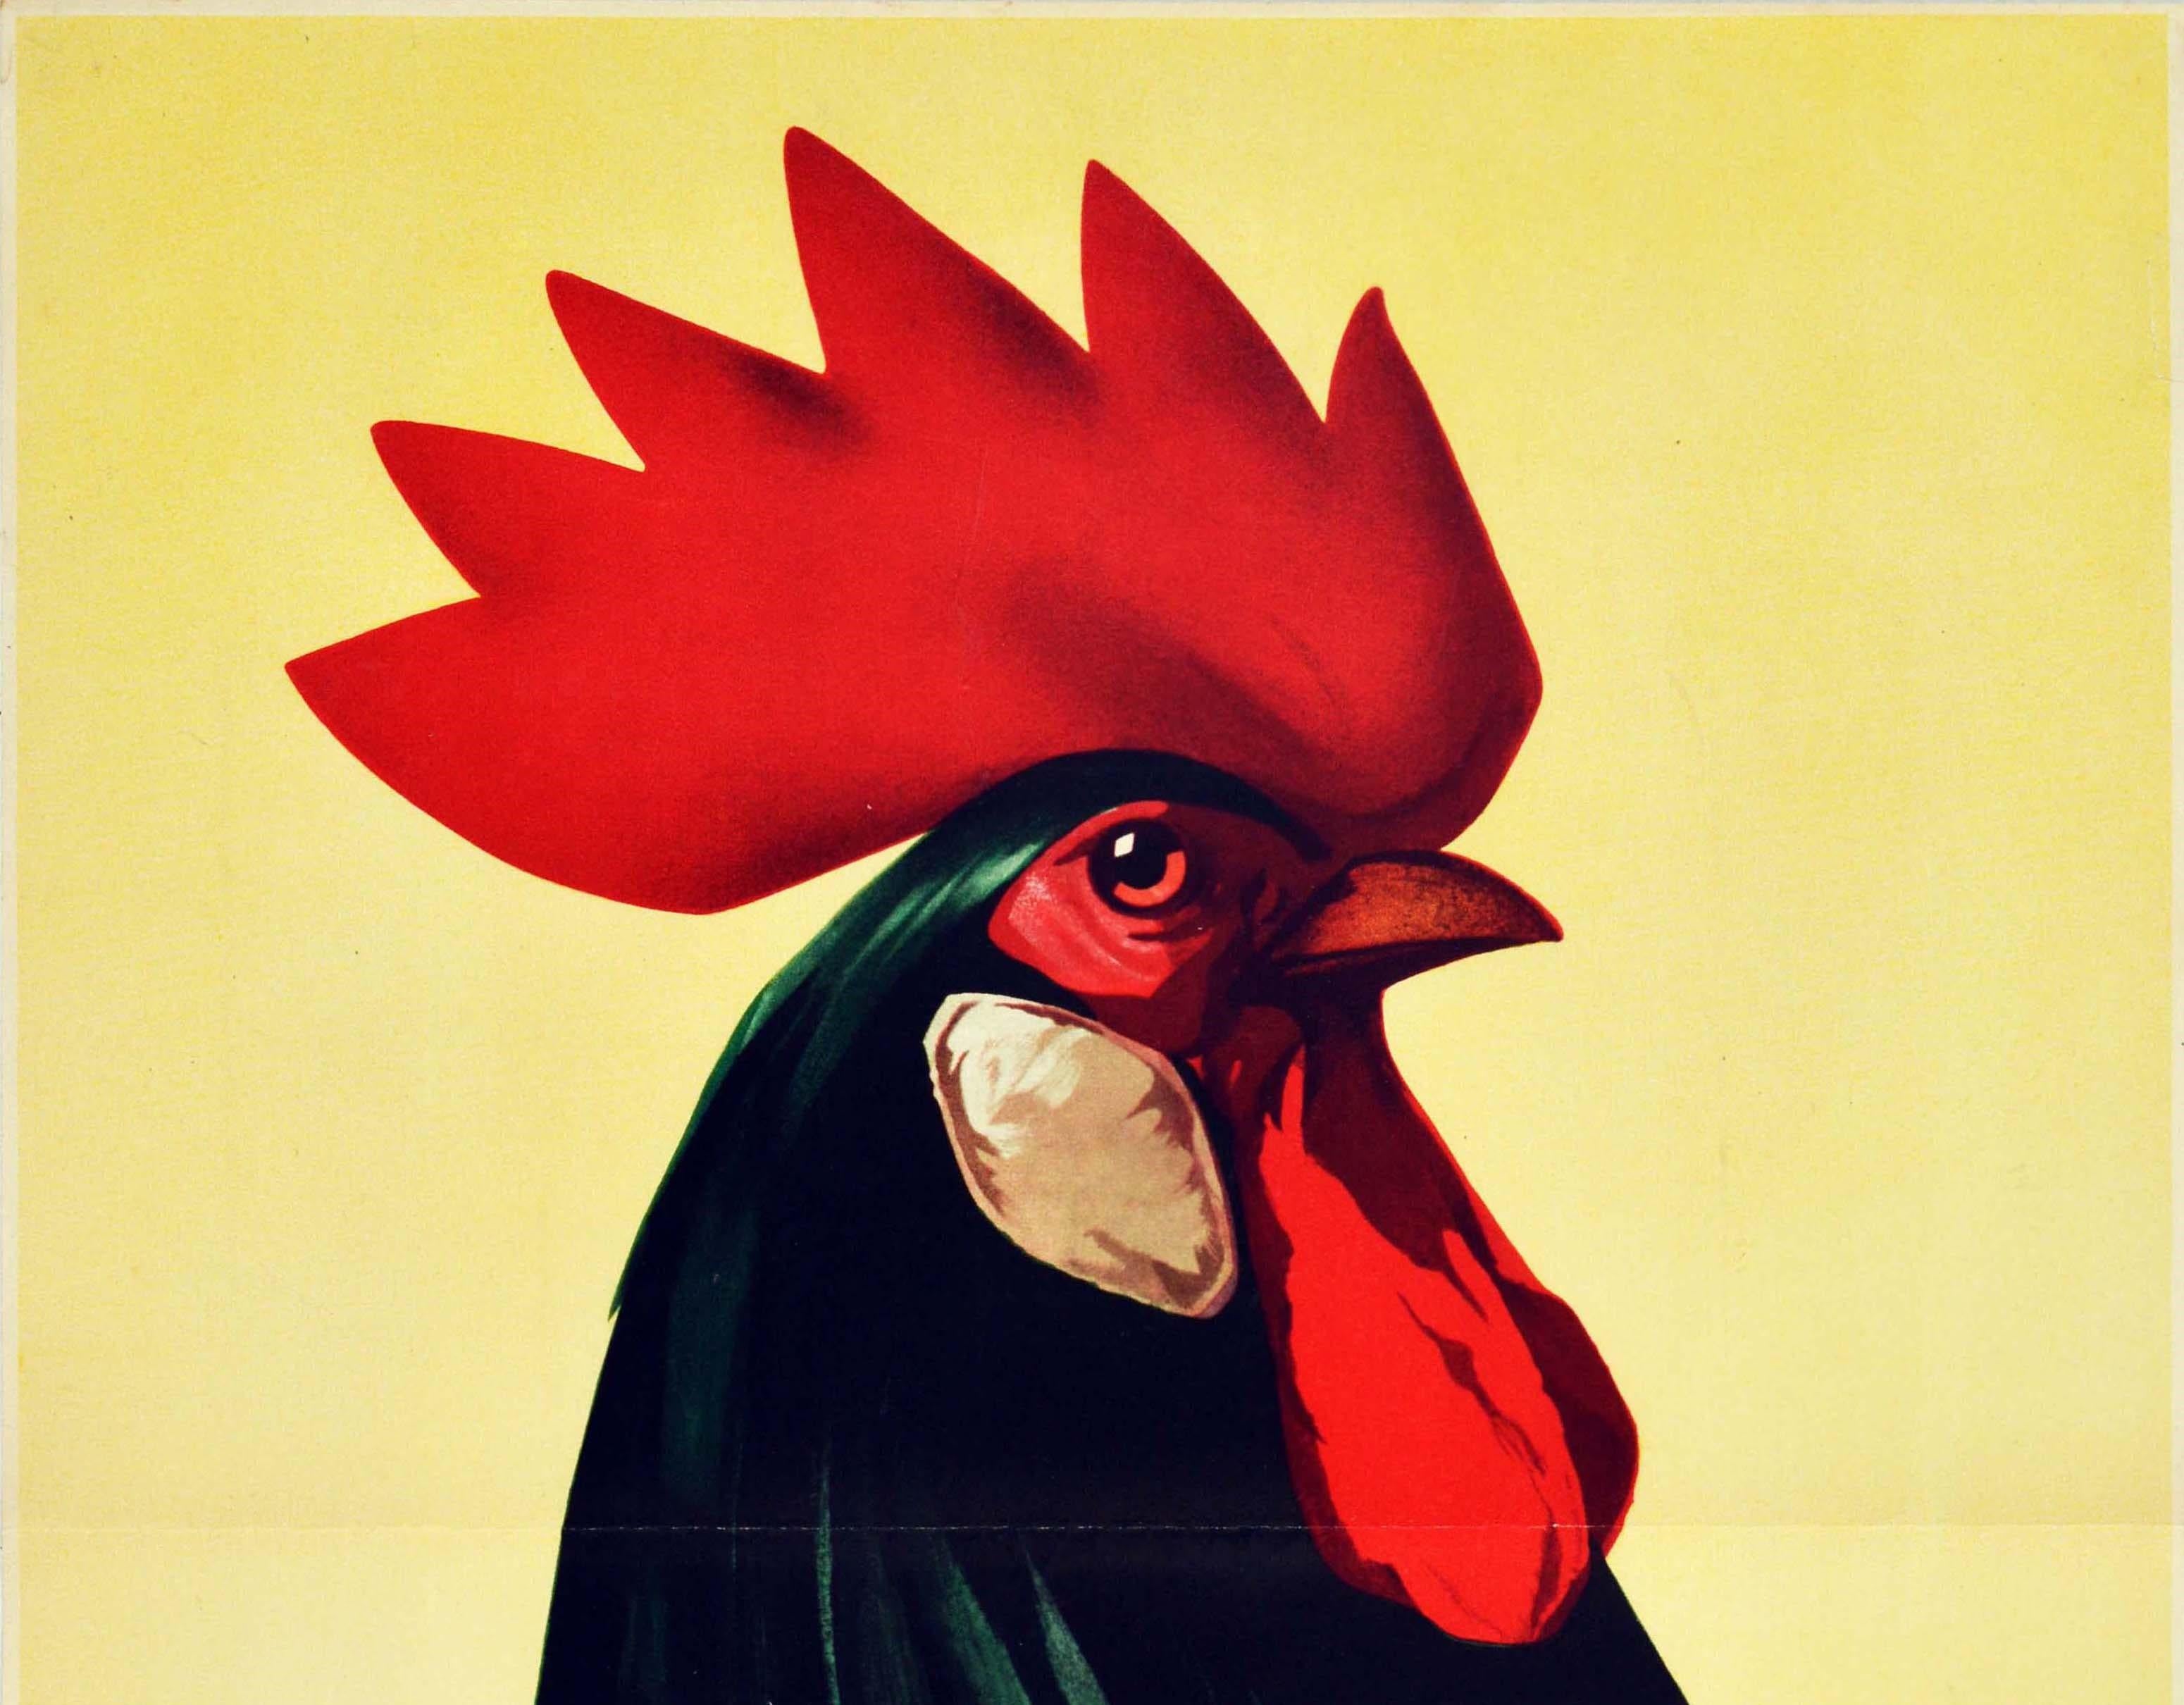 Original Vintage Poster Small Animal Show Leipzig Farm Cockerel Rooster Artwork - Print by Drescher